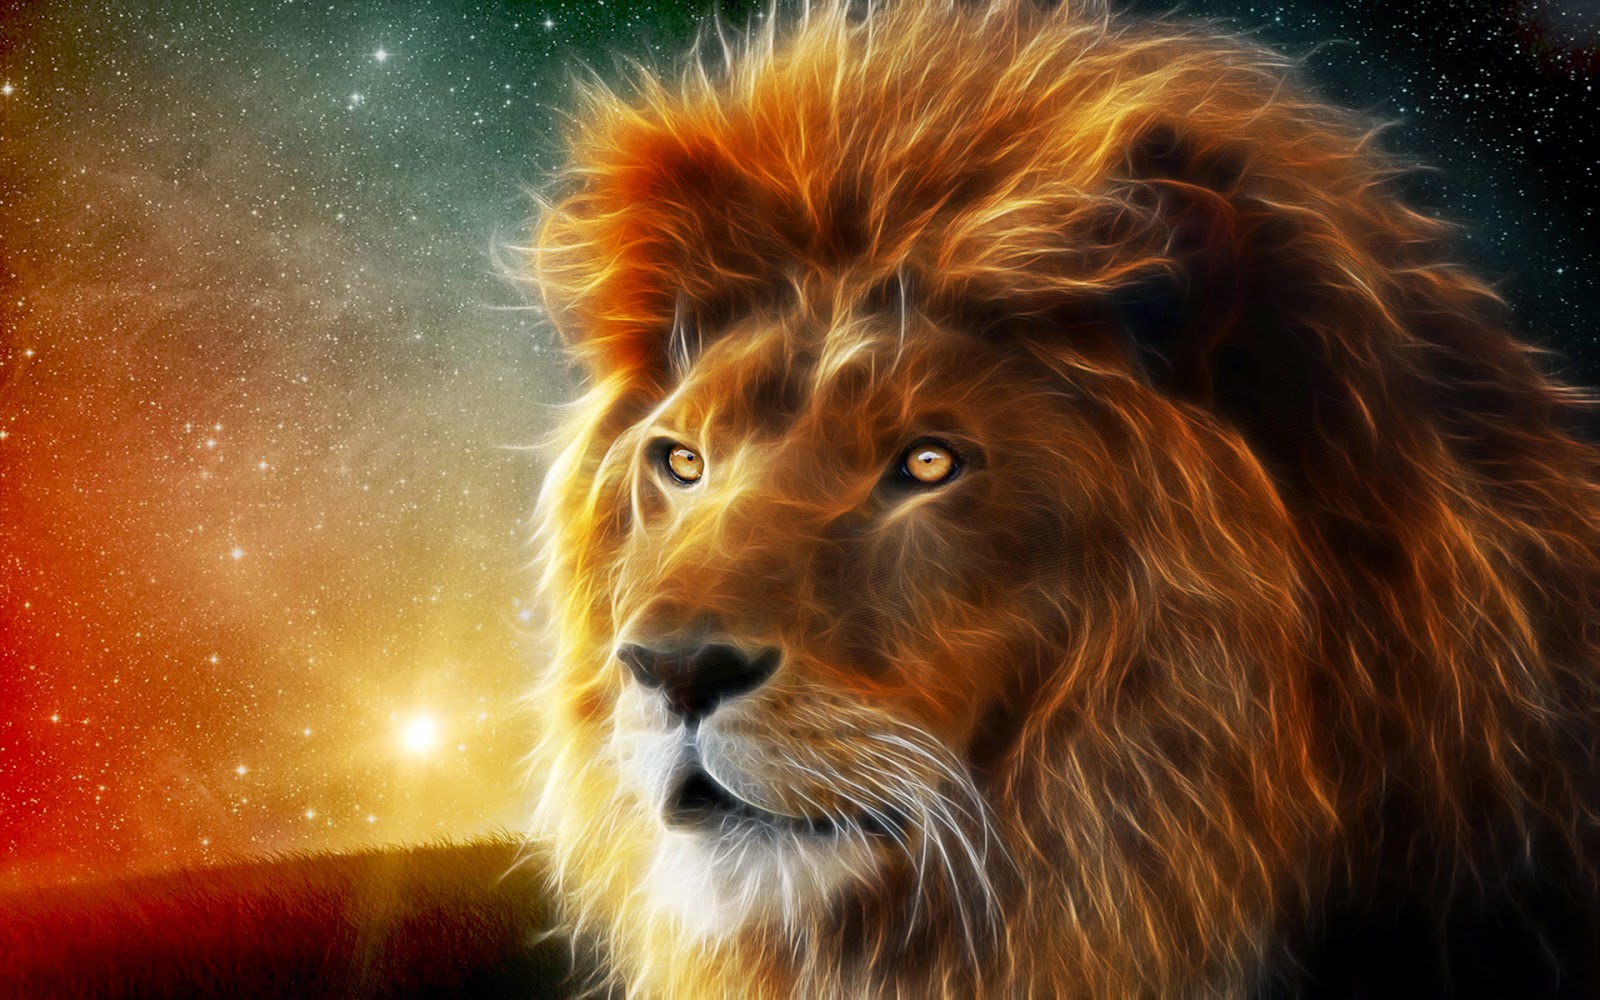 Awakening the Dragon: The Spiritual Sun Is Rising, the Lion Sleeps No More